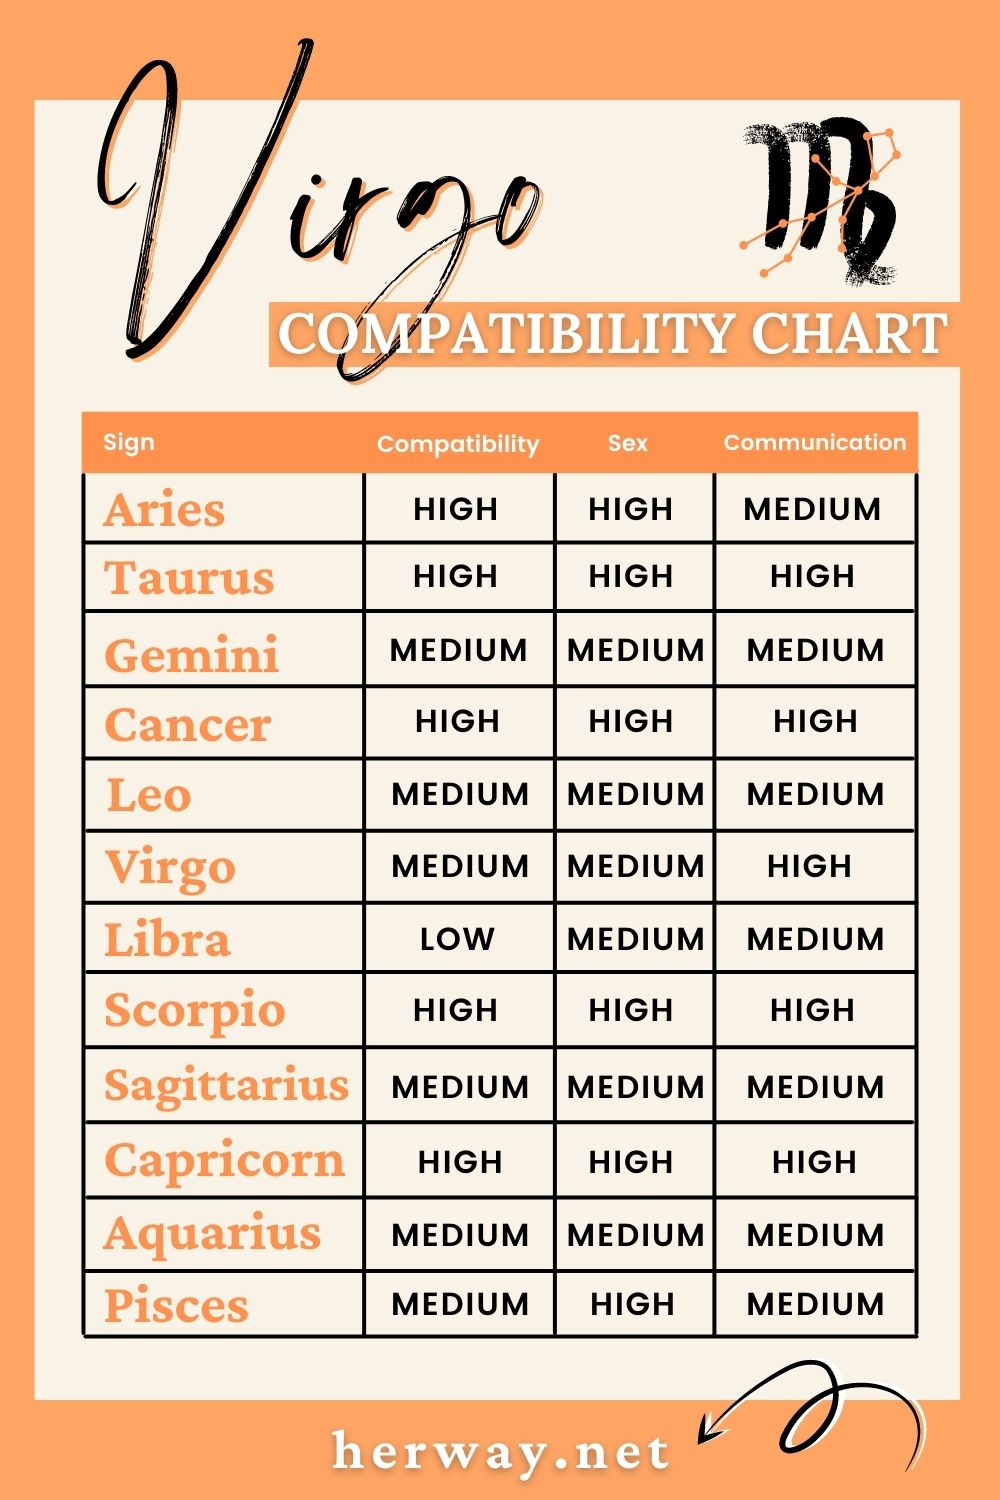 virgo compatibility chart